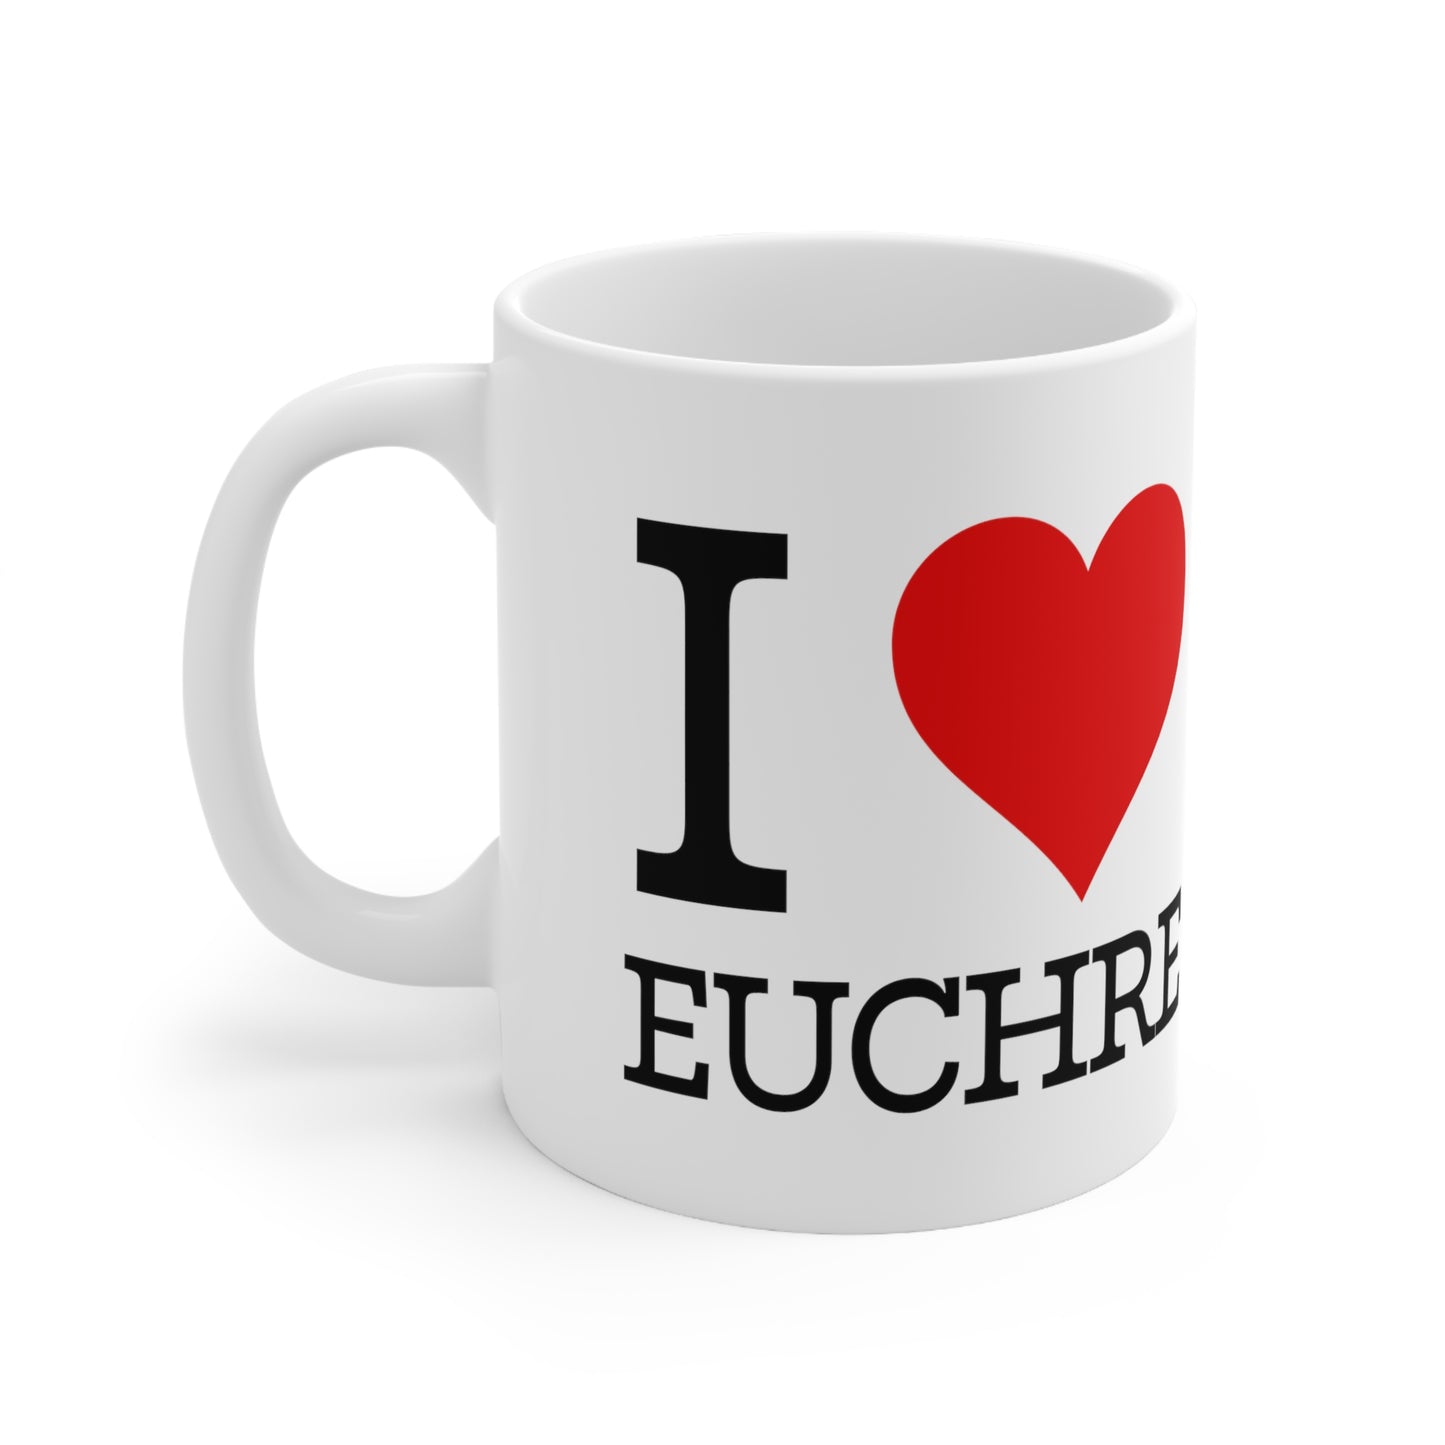 "I ❤️ Euchre" Mug